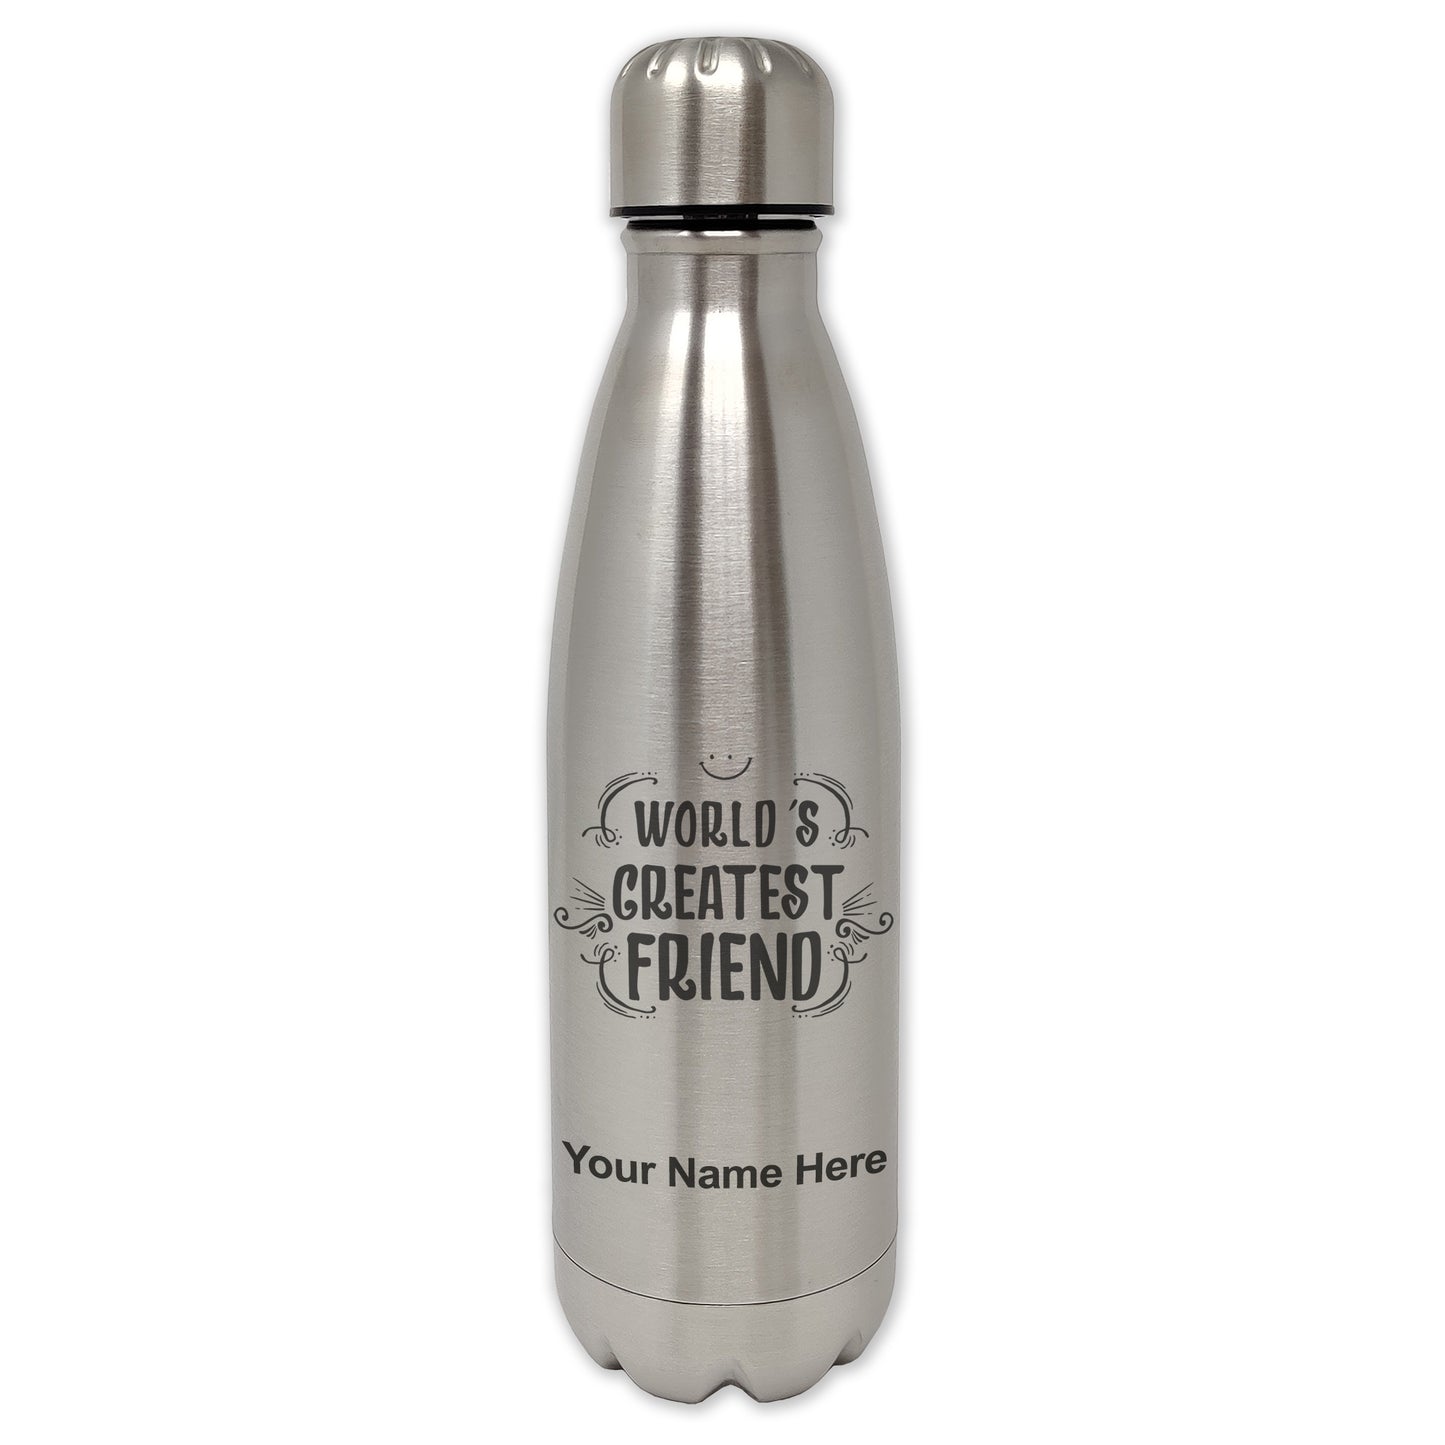 LaserGram Single Wall Water Bottle, World's Greatest Friend, Personalized Engraving Included